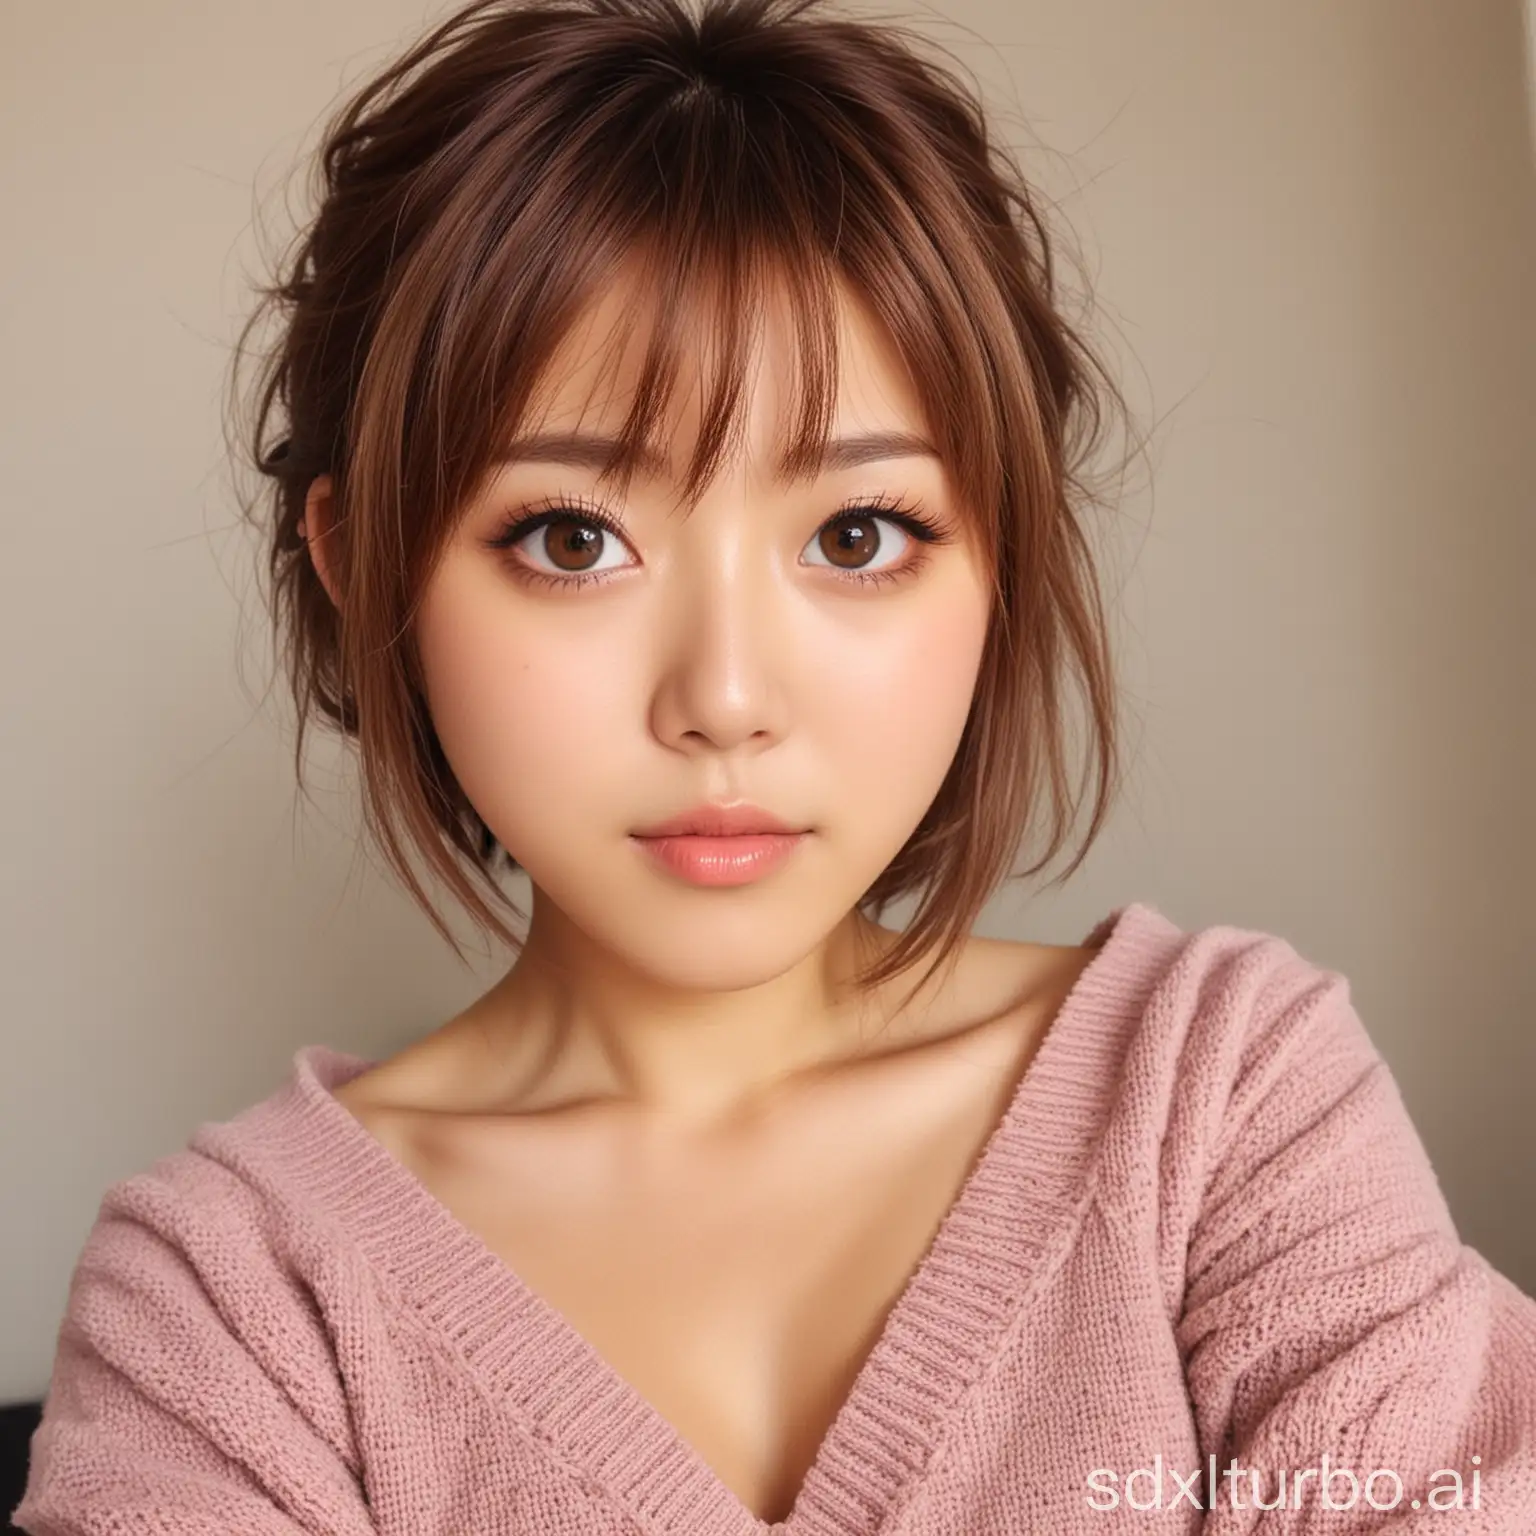 japanese idol, gorgeous face, cute, soft, brown hair, big eyes, hot body